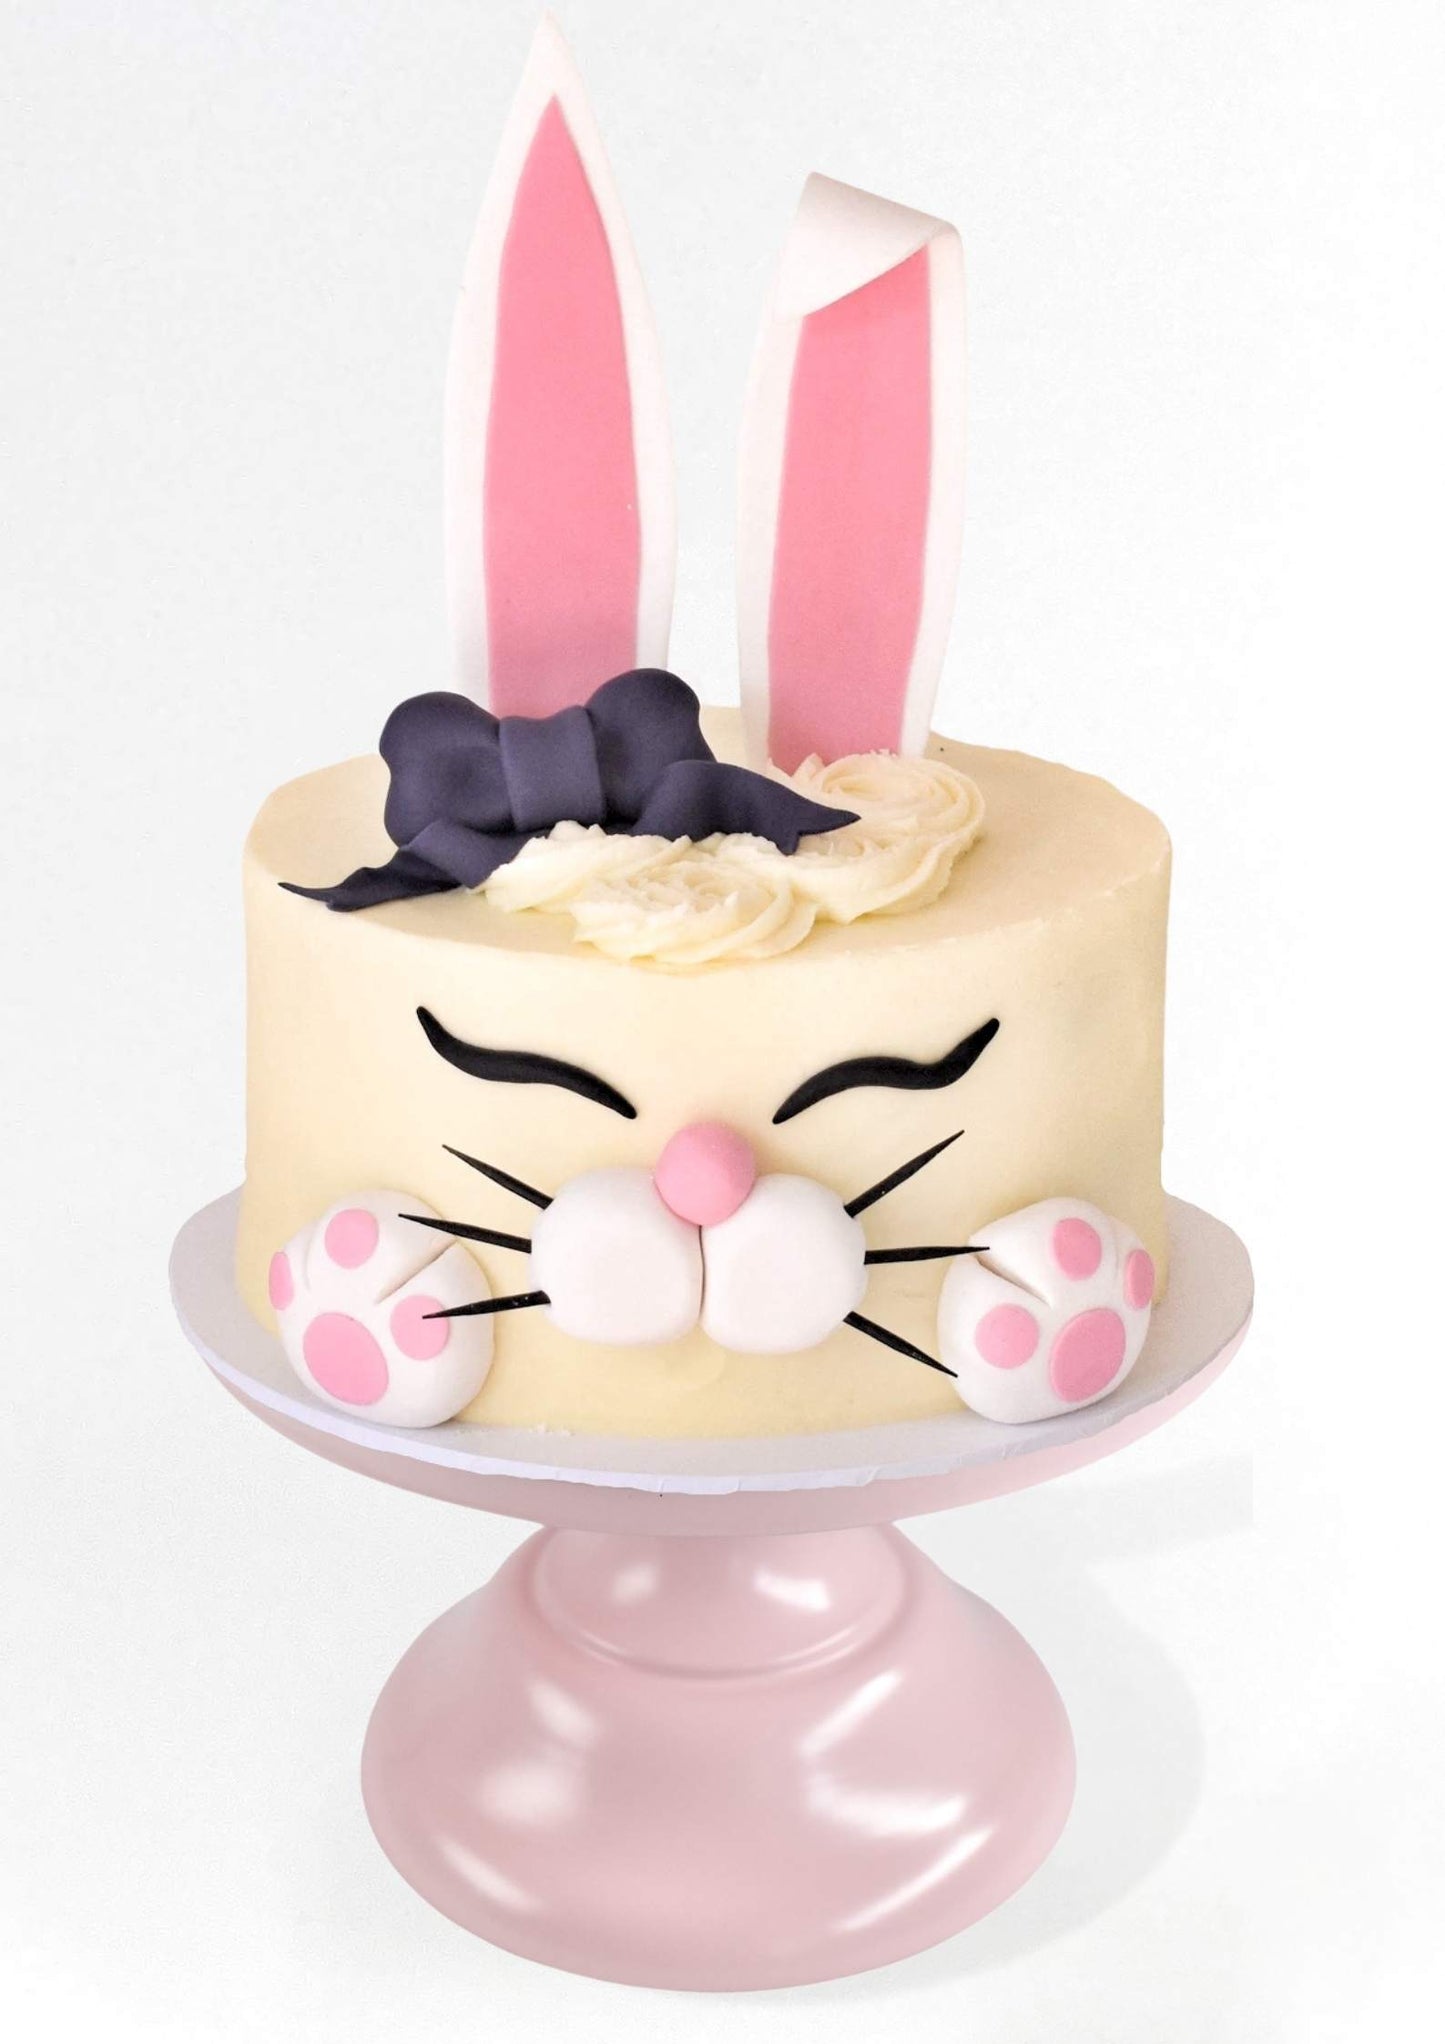 Bunny Cake Kit, DIY Rabbit Cake, Hare Cake, Peter Rabbit Cake, Easter Bunny, Animal